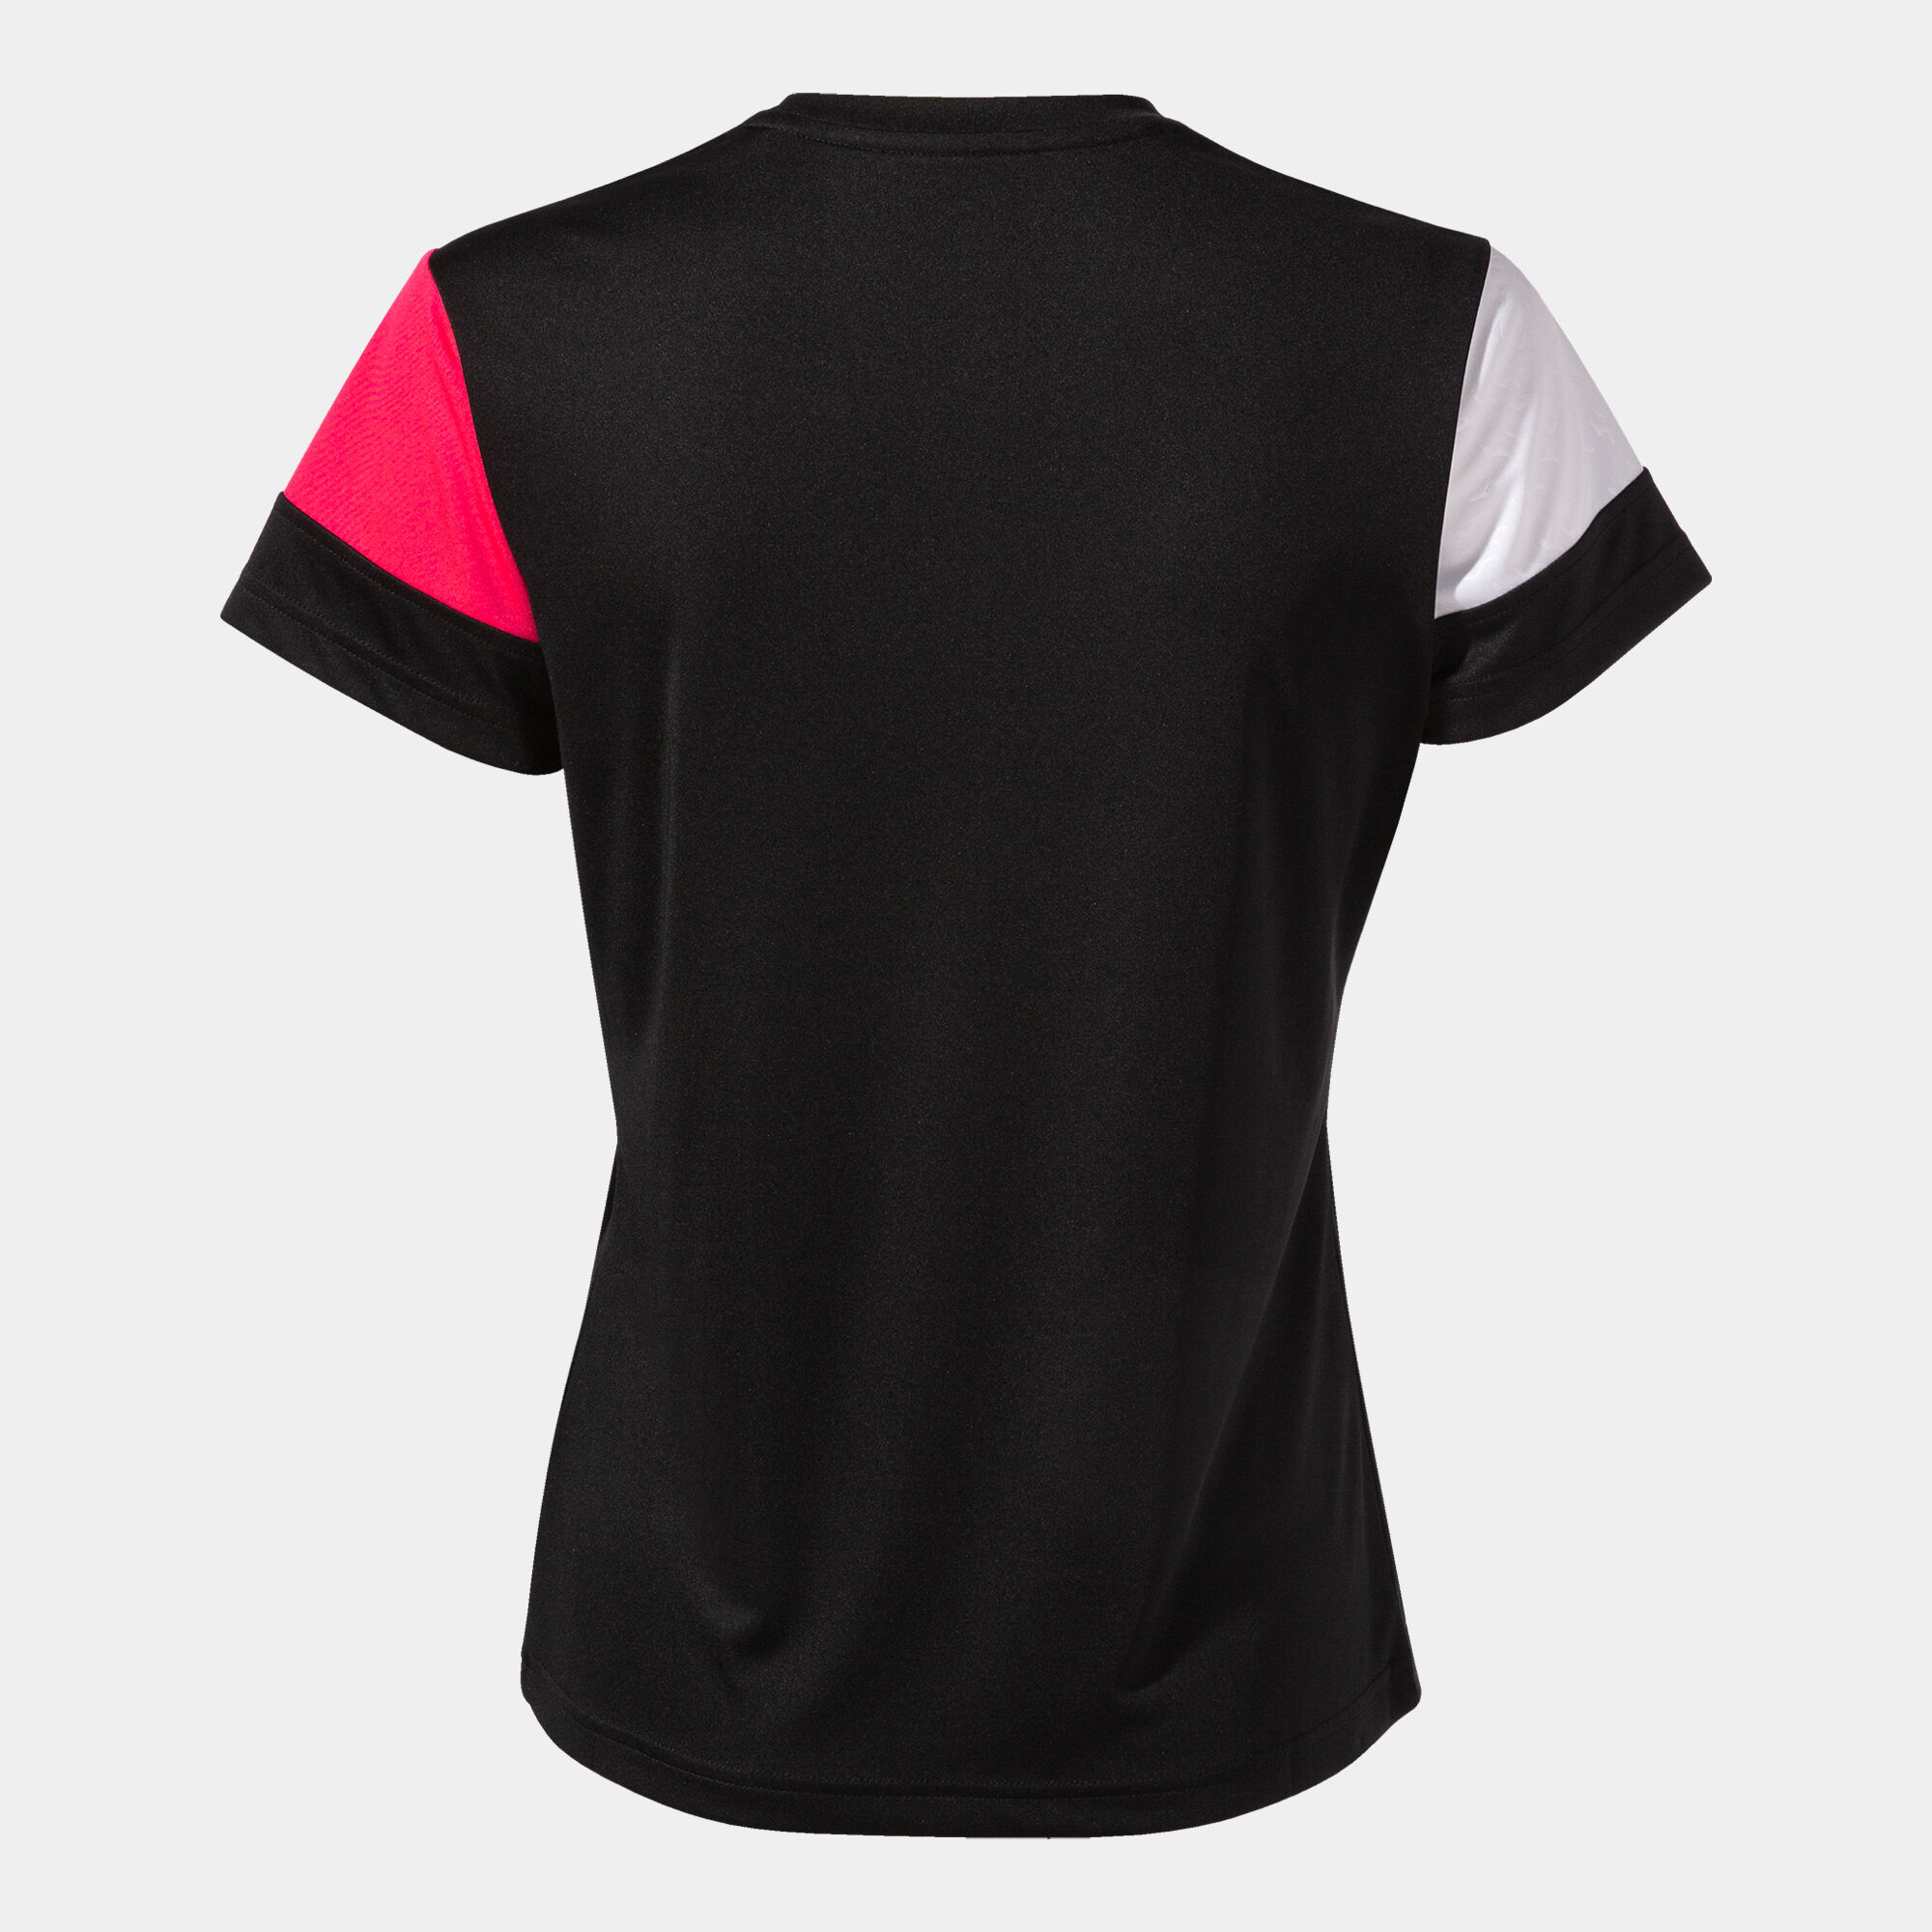 Camiseta manga corta mujer Crew V negro rosa